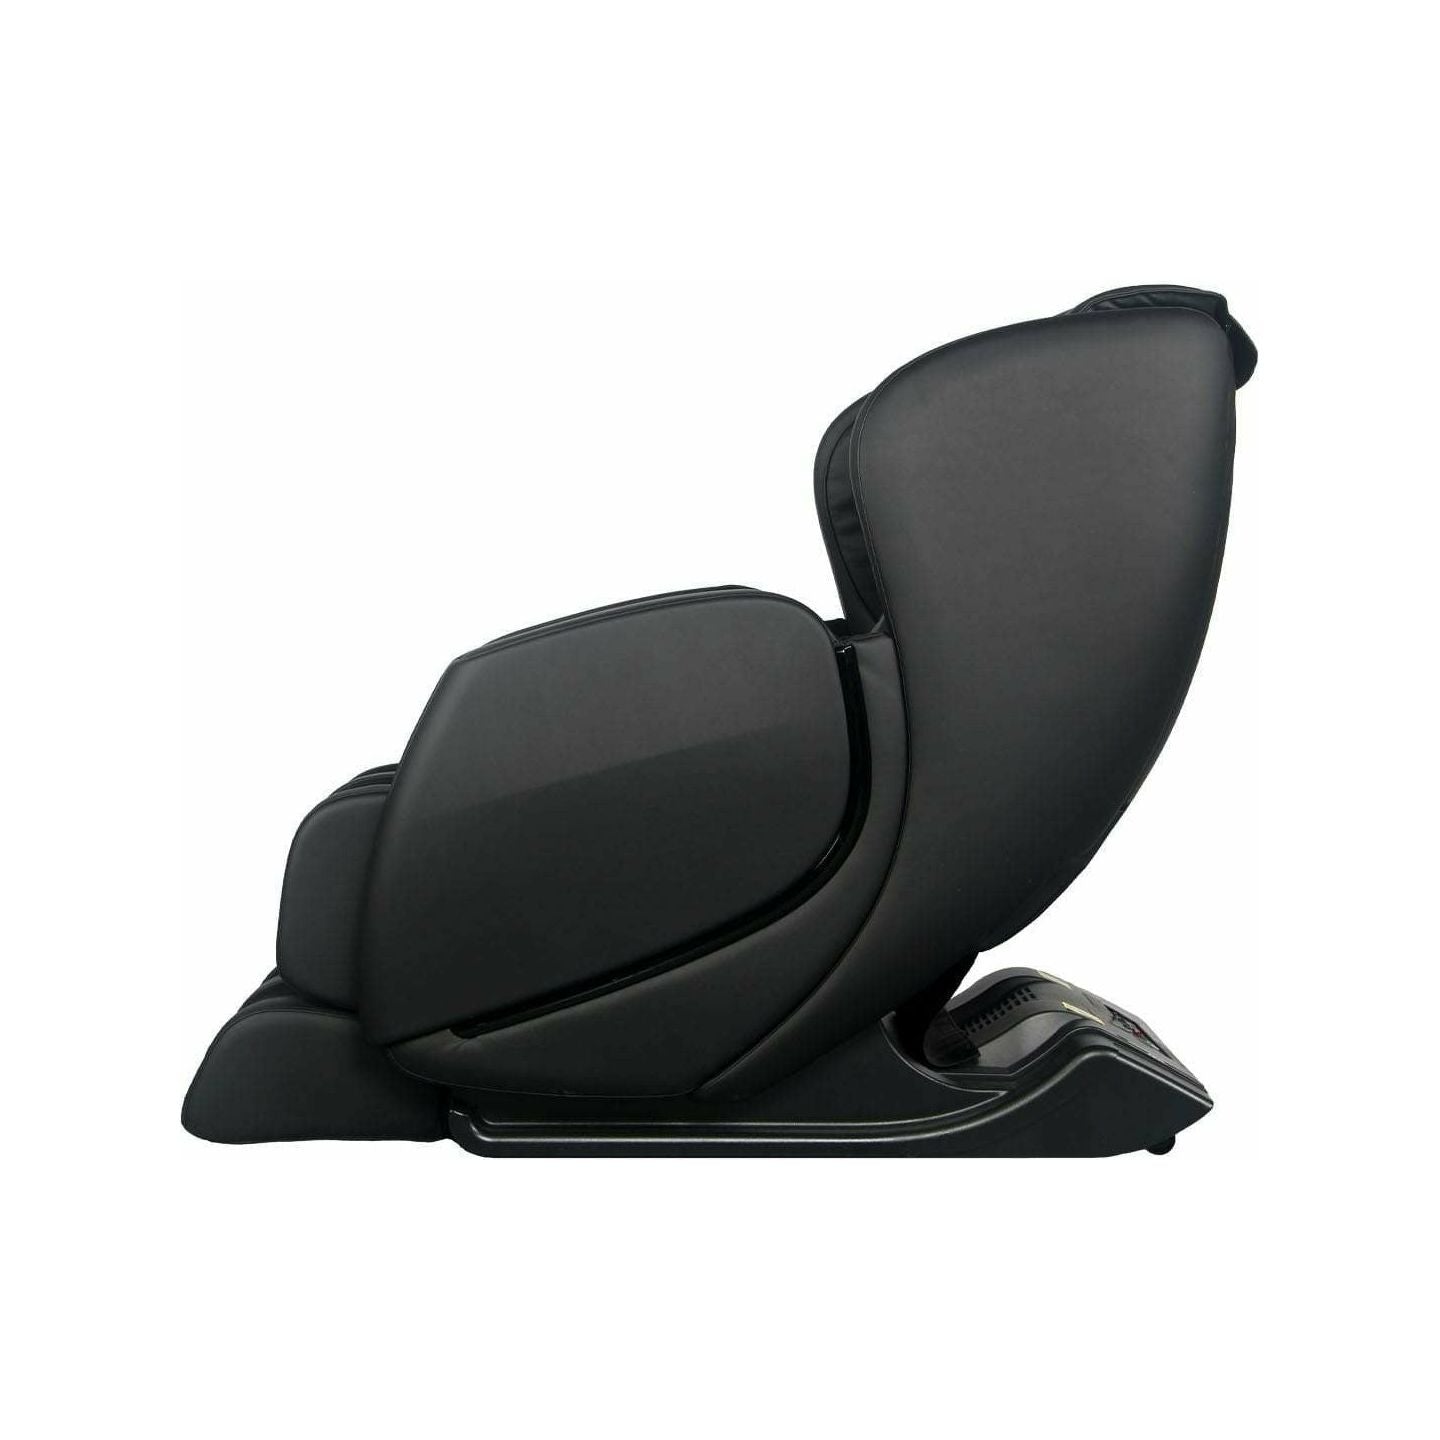 Sharper Image Revival Zero Gravity L-track Massage Chair